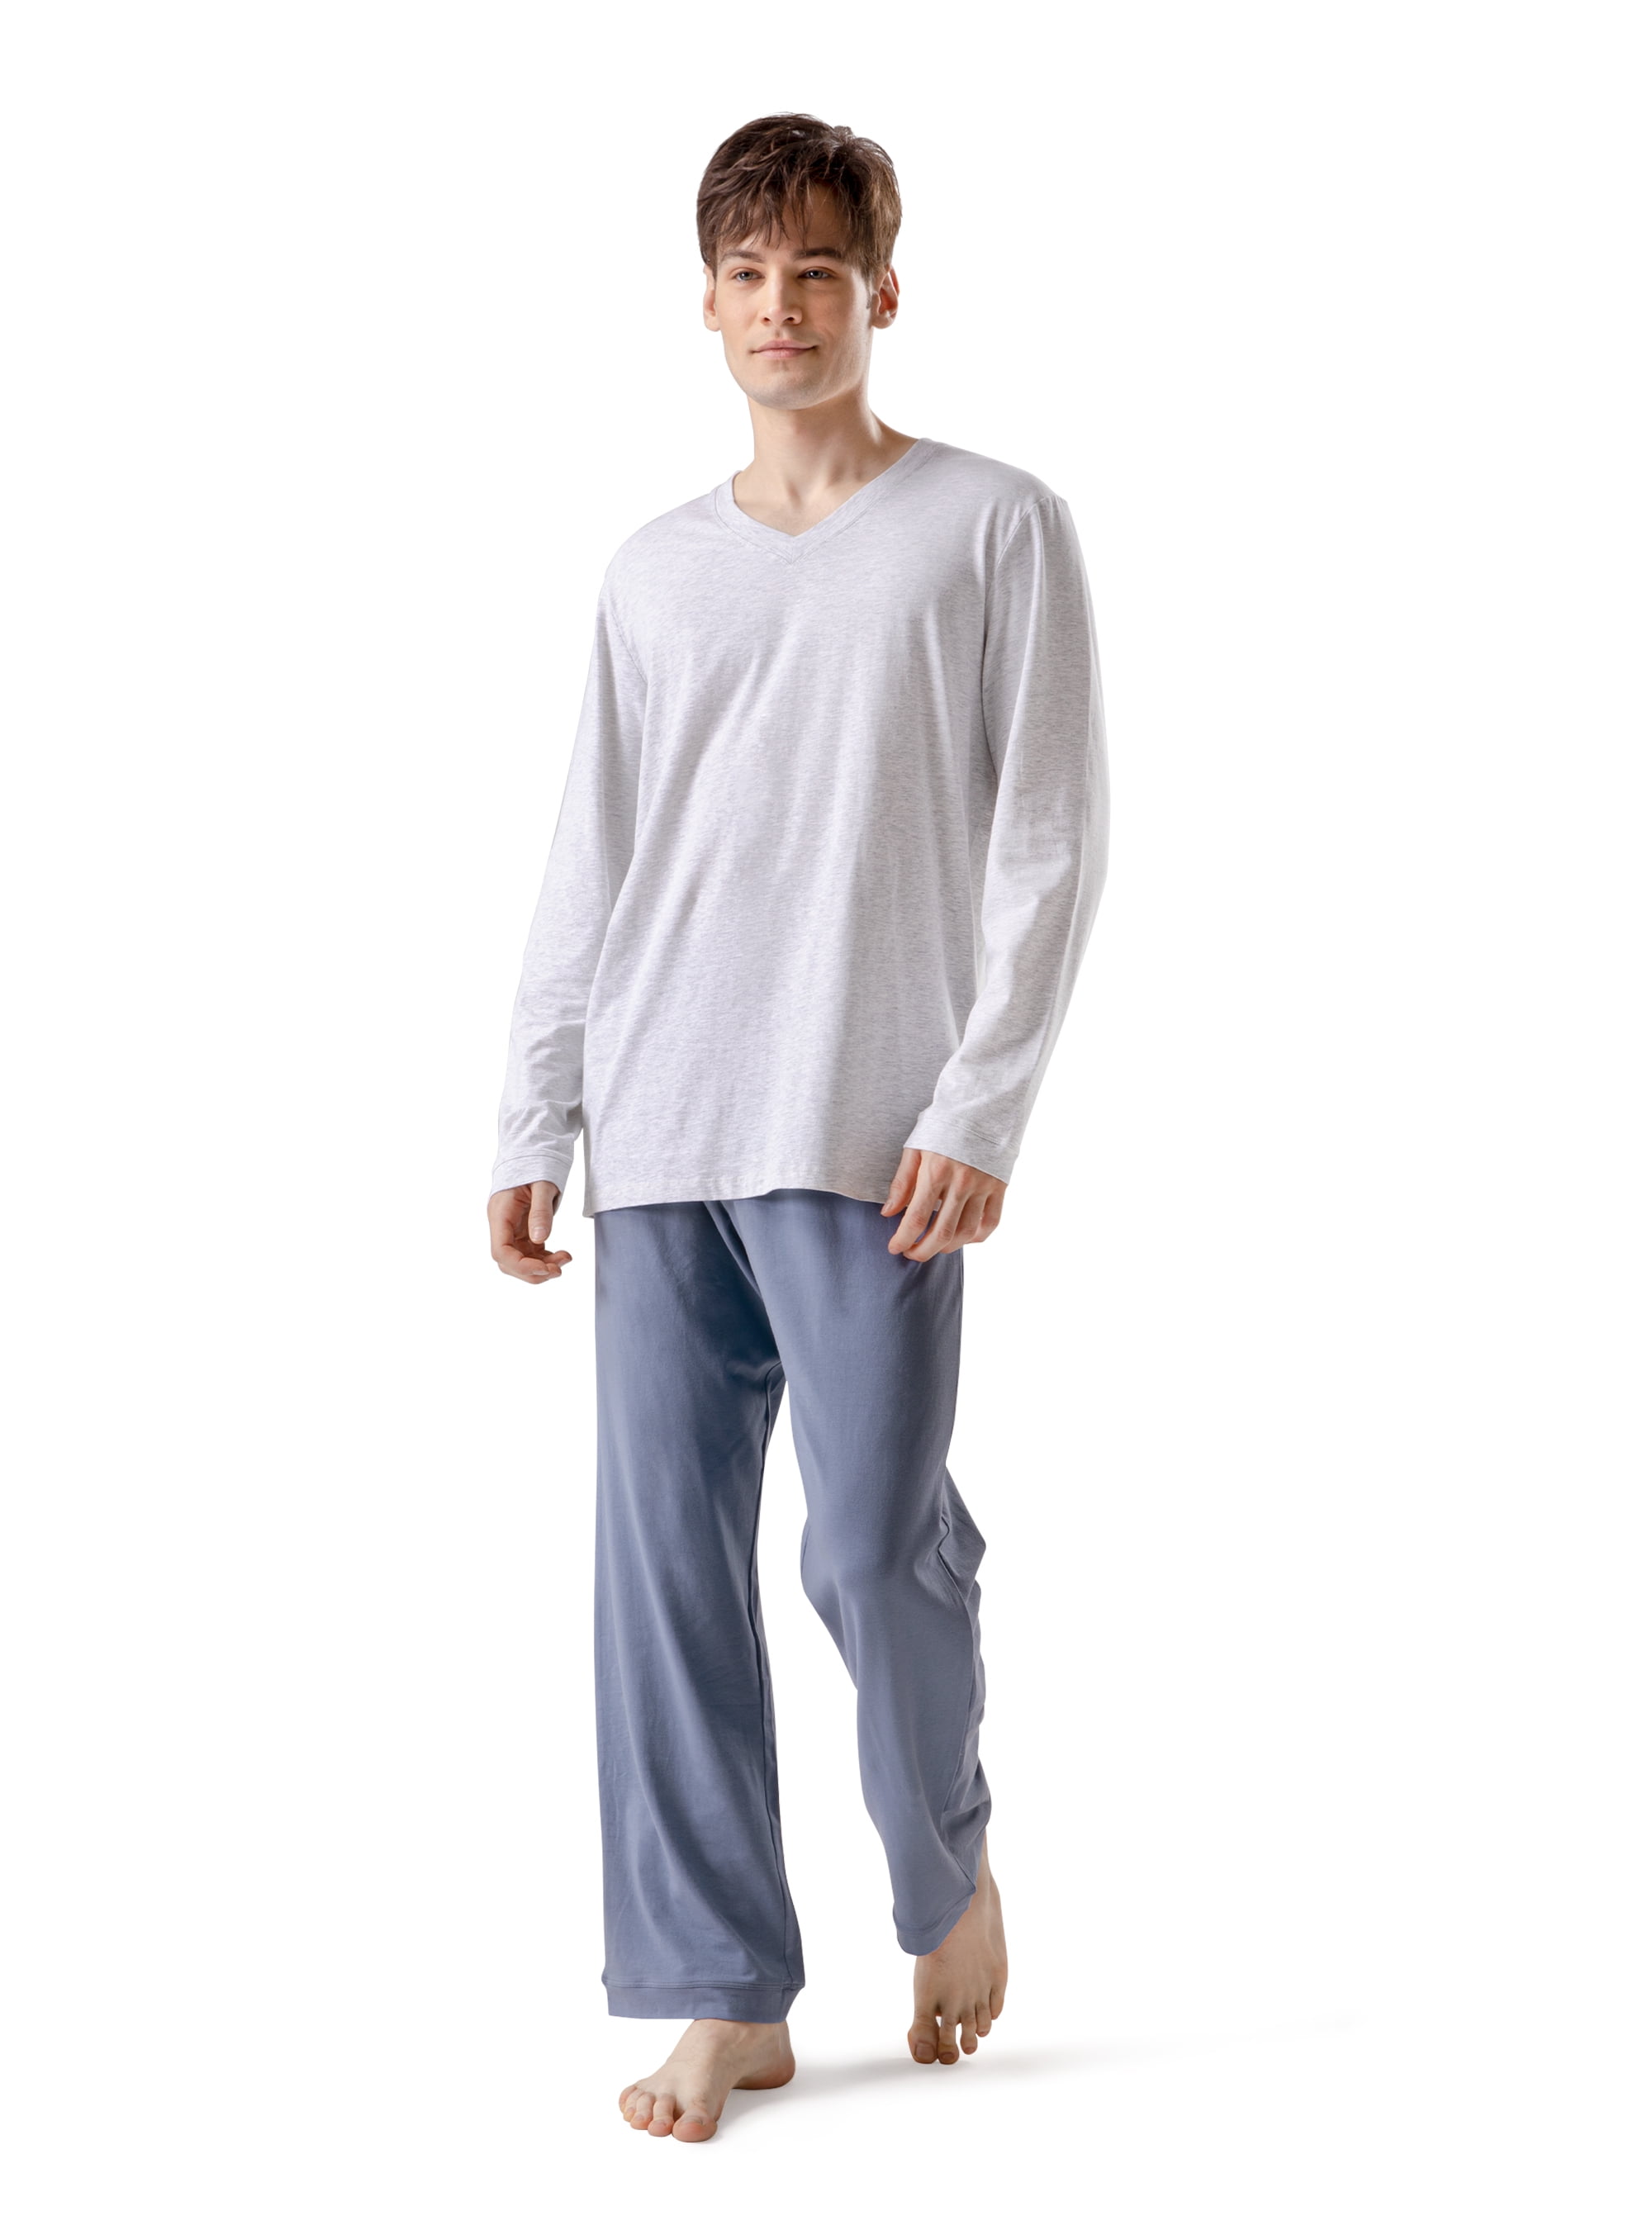 DAVID ARCHY Mens Cotton Raglan Sleepwear Long Sleeve Top & Bottom Pajama Lounge Set